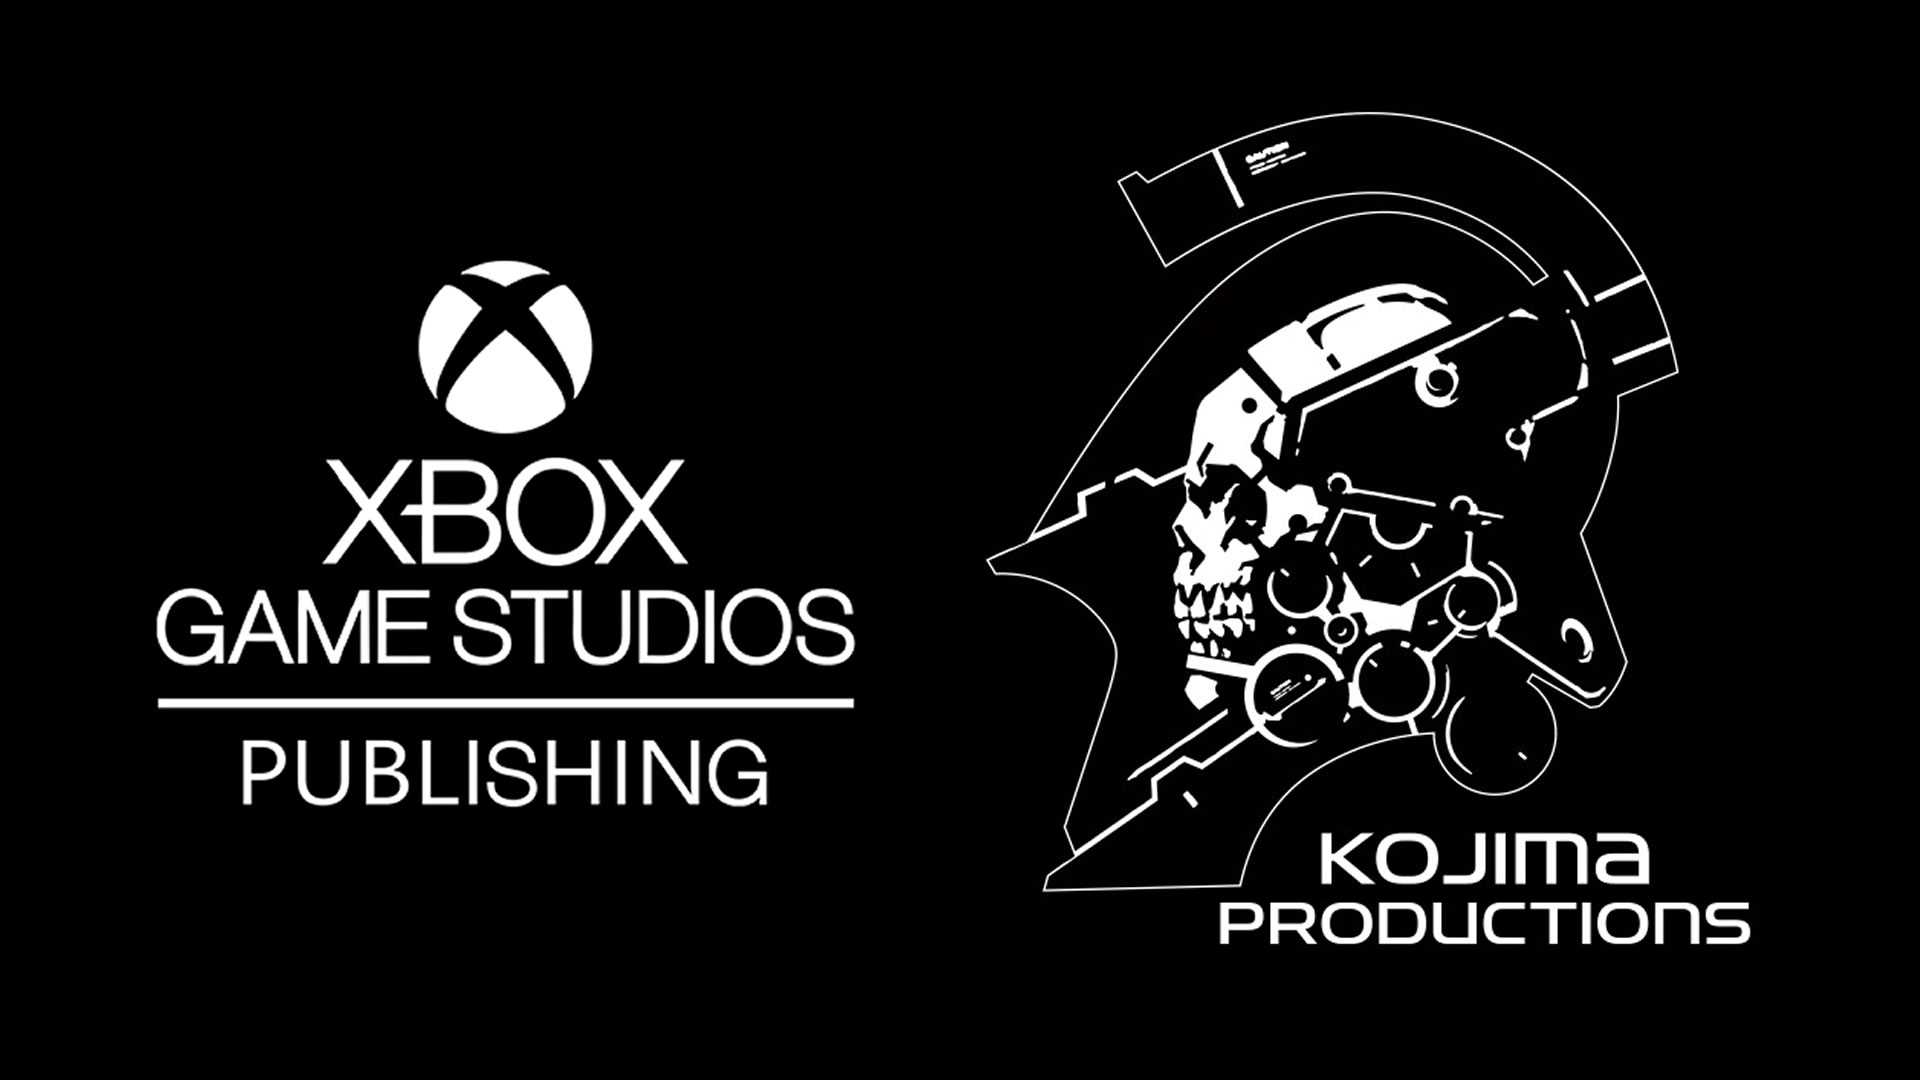 hideo kojima productions Xbox Game Pass